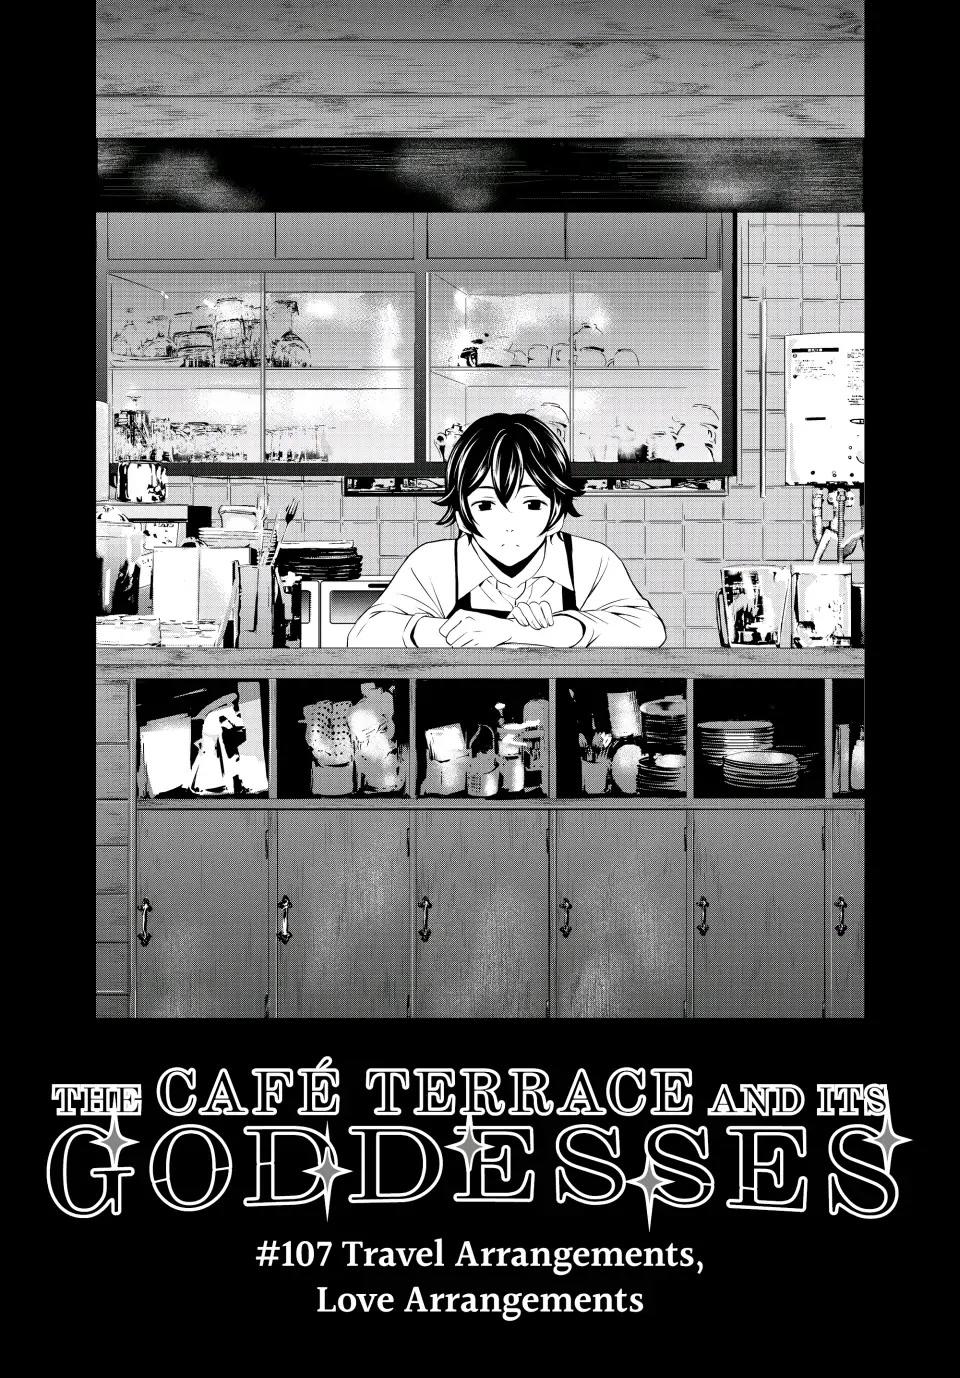 Read Goddess Café Terrace Chapter 89: Departure - Manganelo